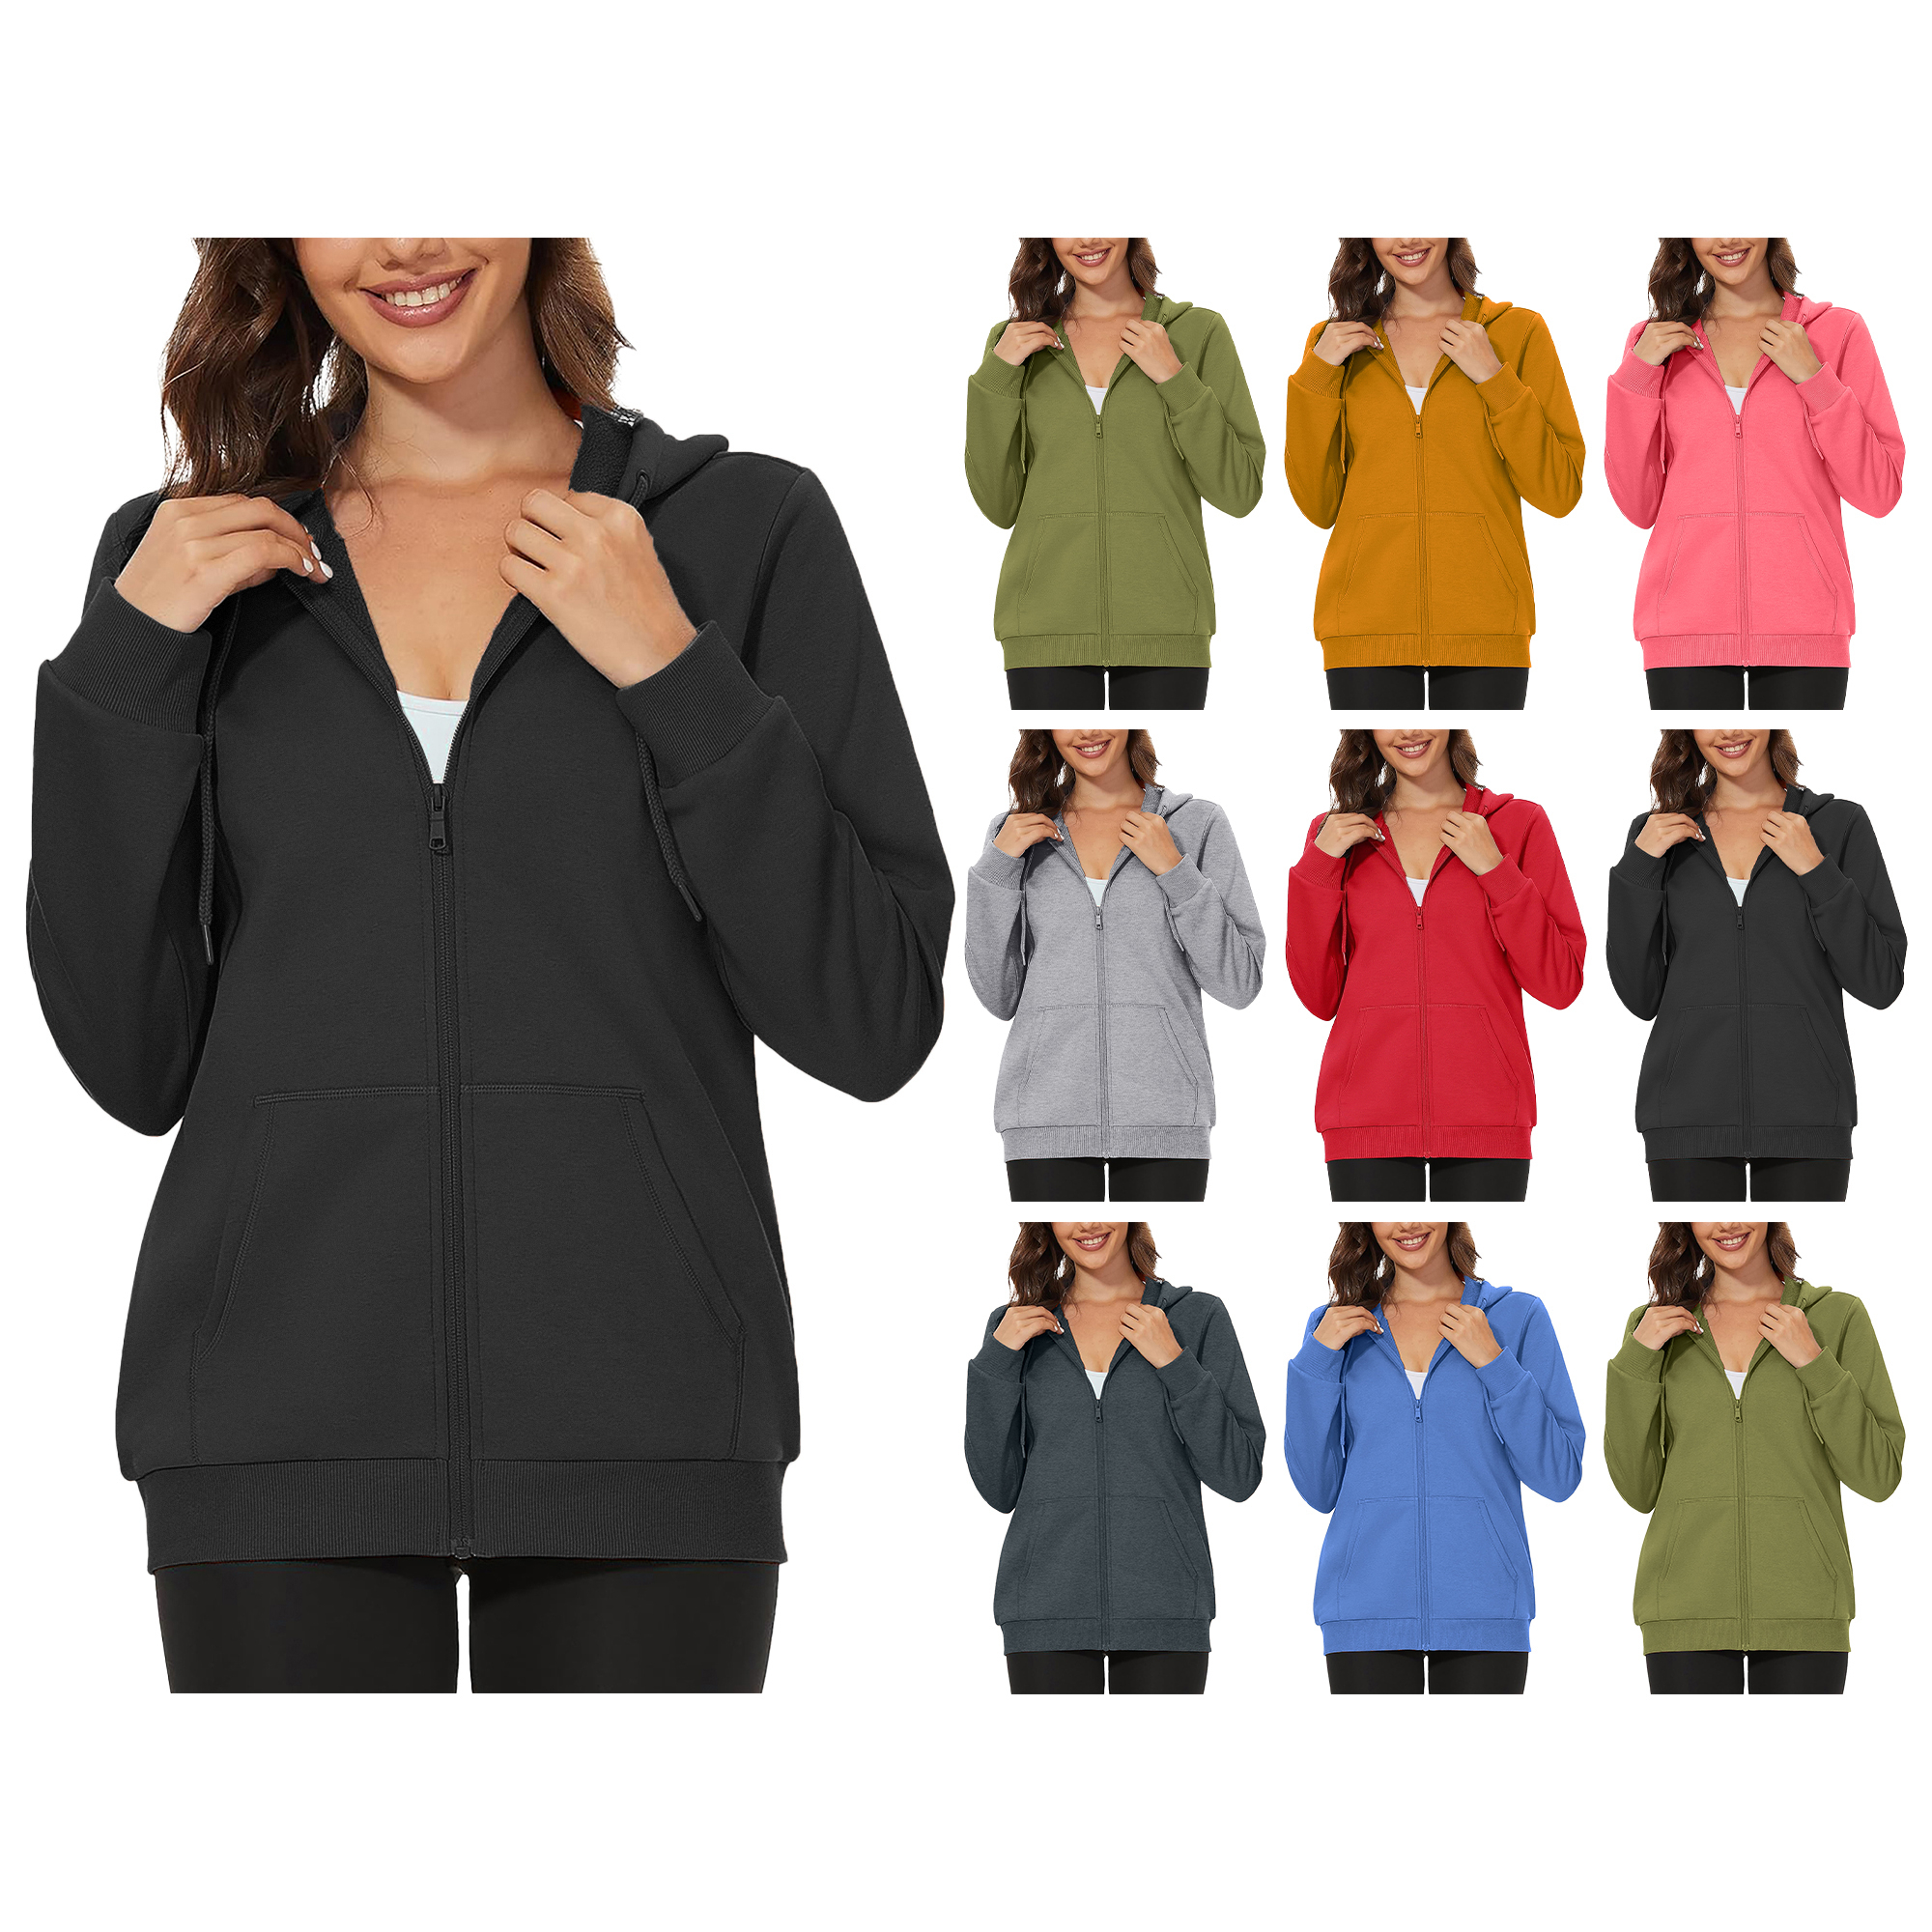 Women's Winter Warm Soft Blend Fleece Lined Full Zip Up Hoodie - Black, Medium